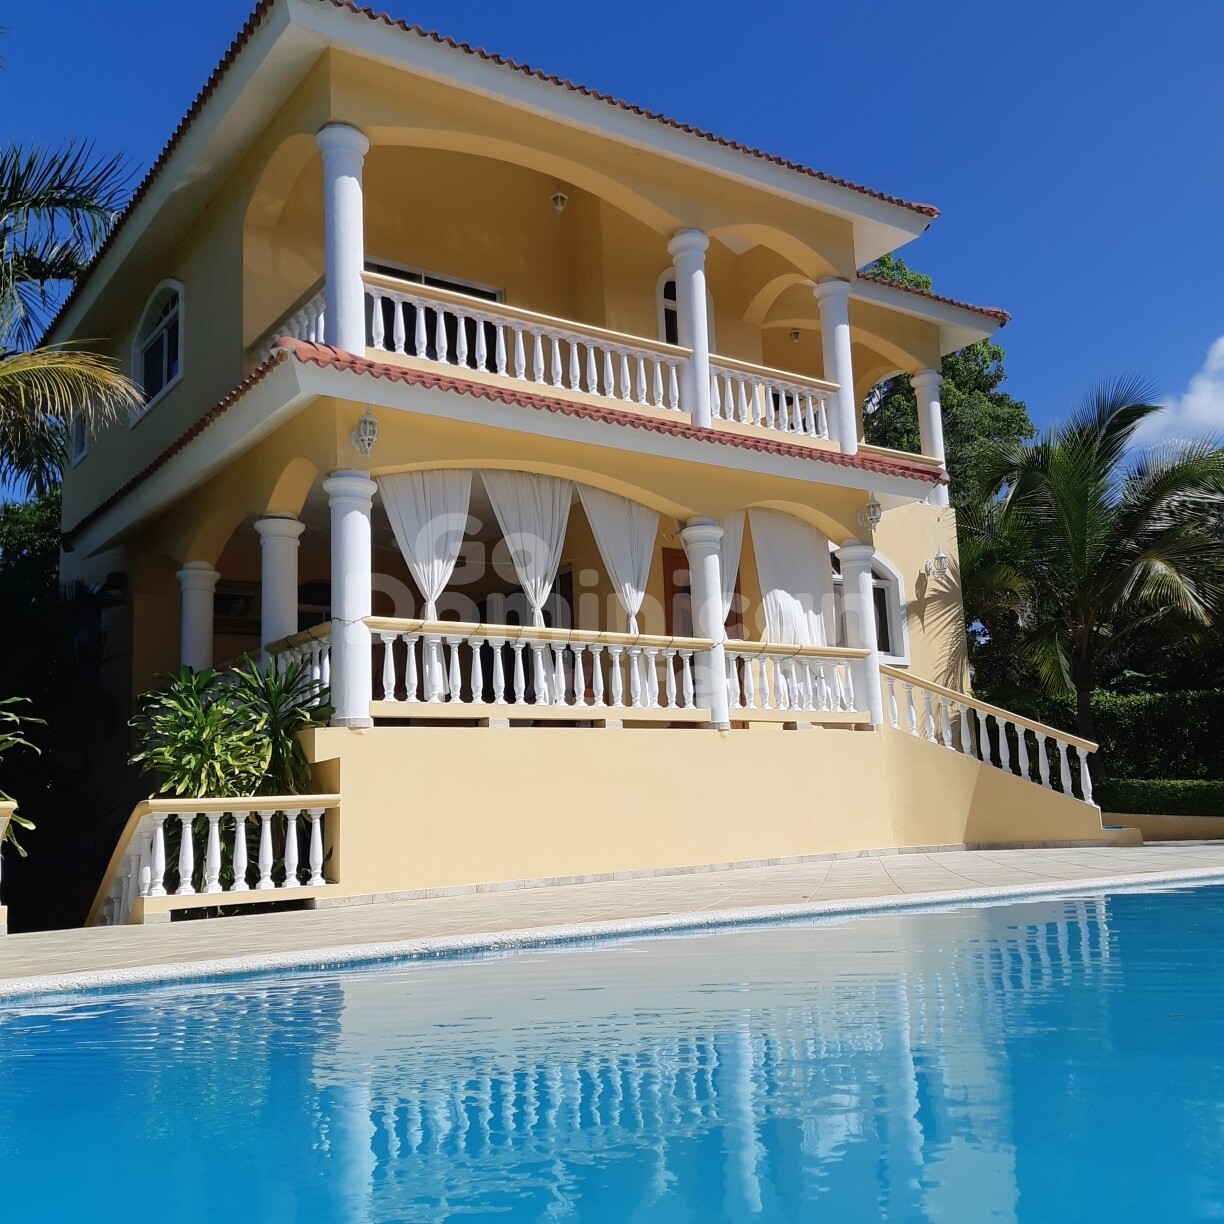 Villa in a prestigious residential area overlooking the ocean